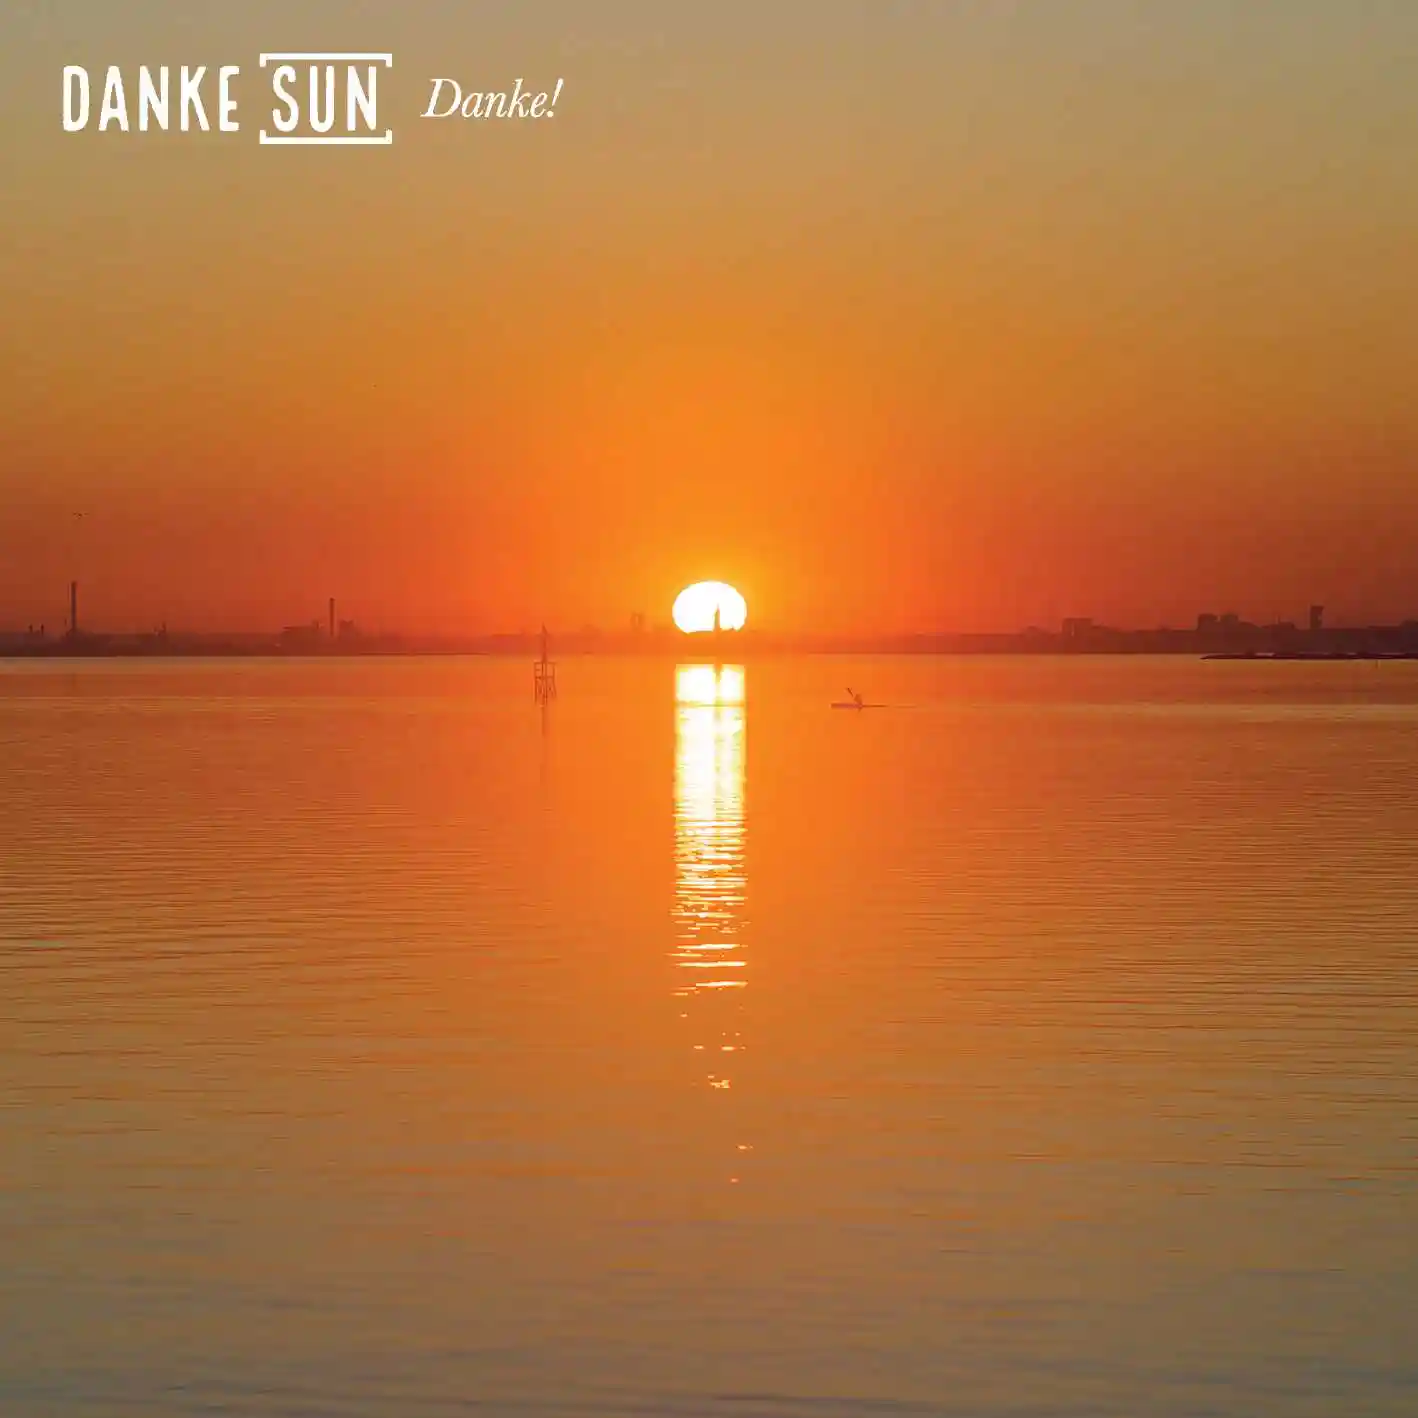 Cover of Danke Sun’s “Danke!”